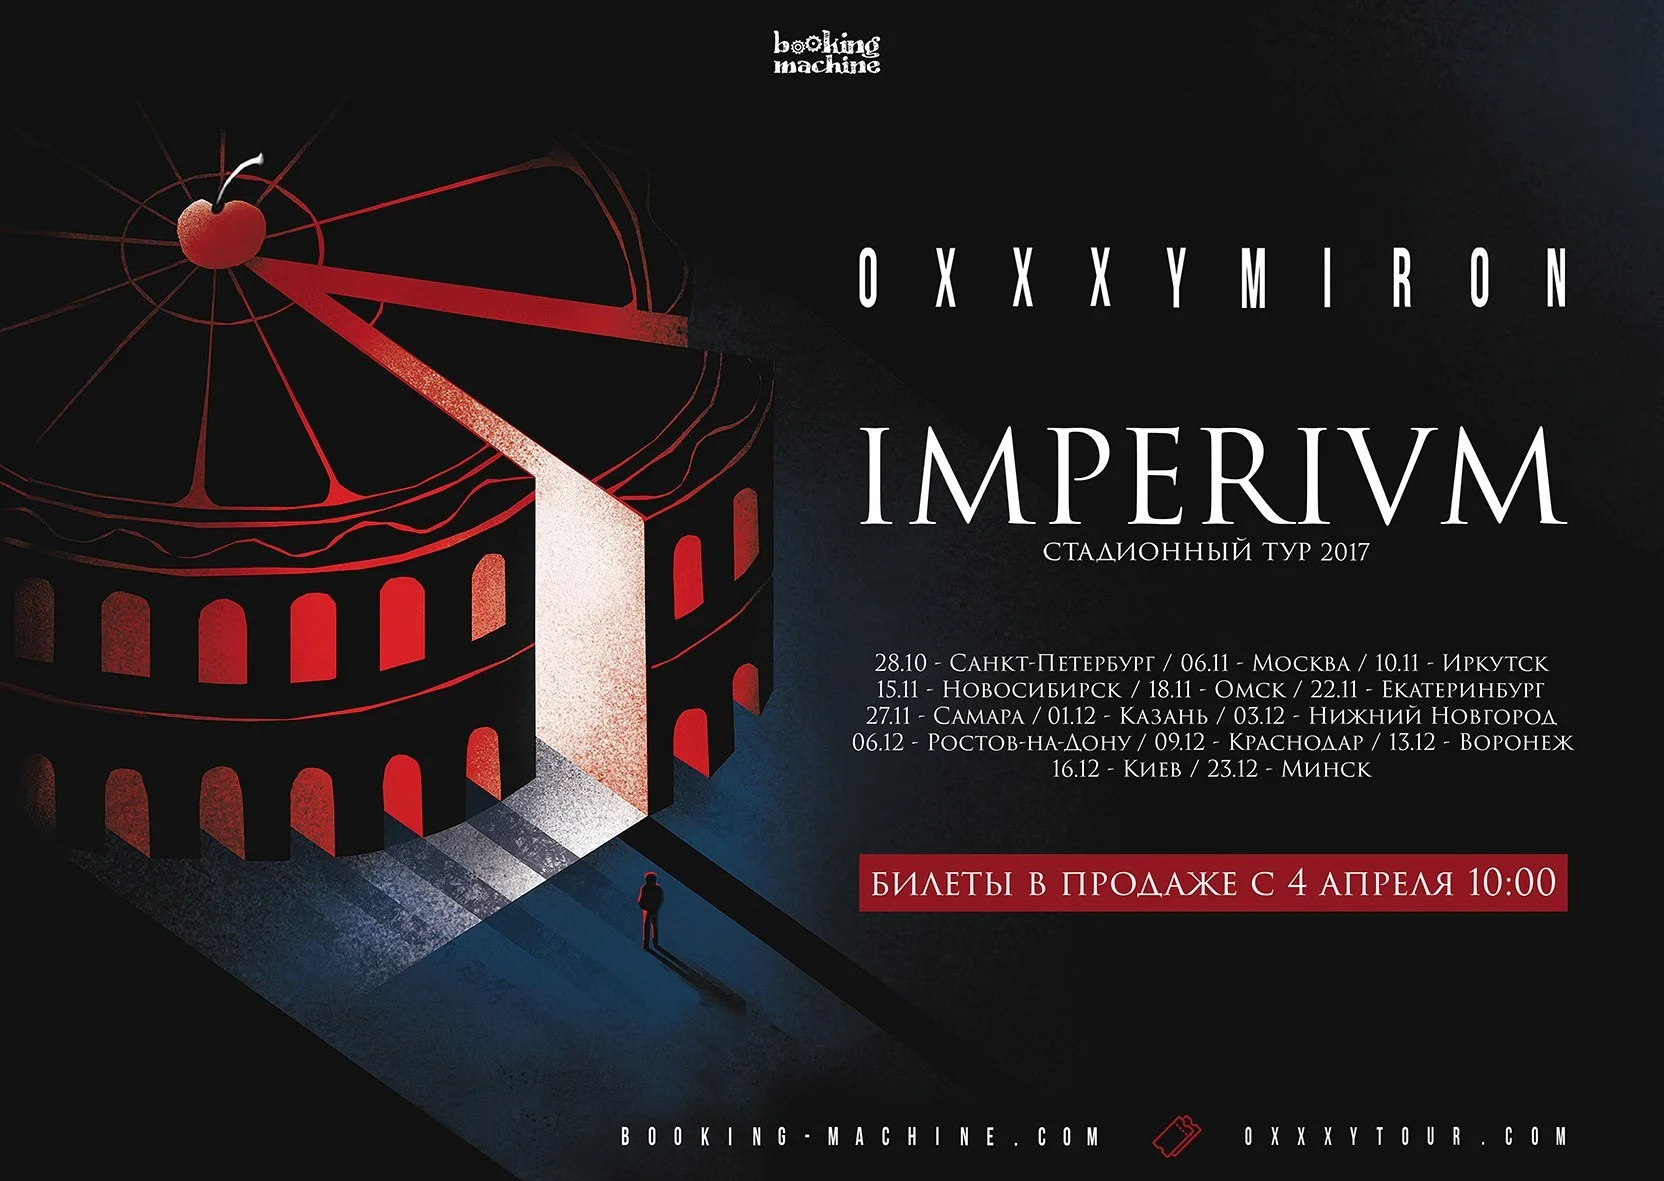 Oxxxymiron анонсировал тур Imperivm и новый материал в 2017 году - фото 1